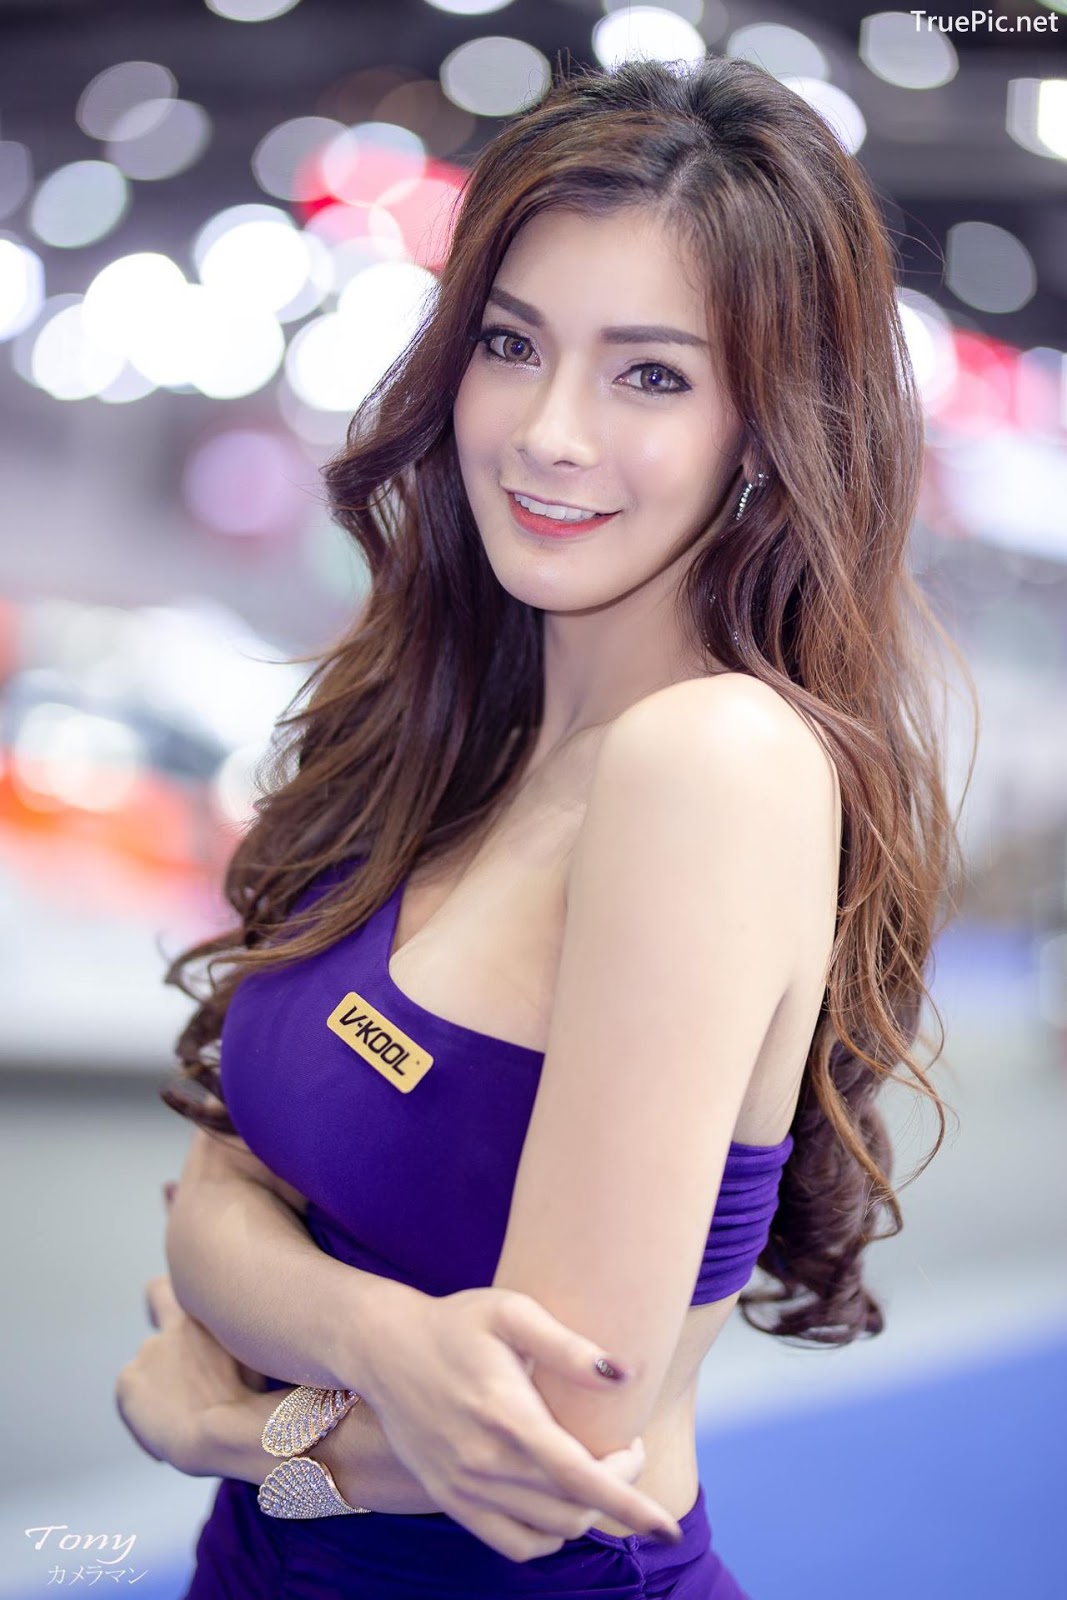 Image-Thailand-Hot-Model-Thai-Racing-Girl-At-Big-Motor-2018-TruePic.net- Picture-24